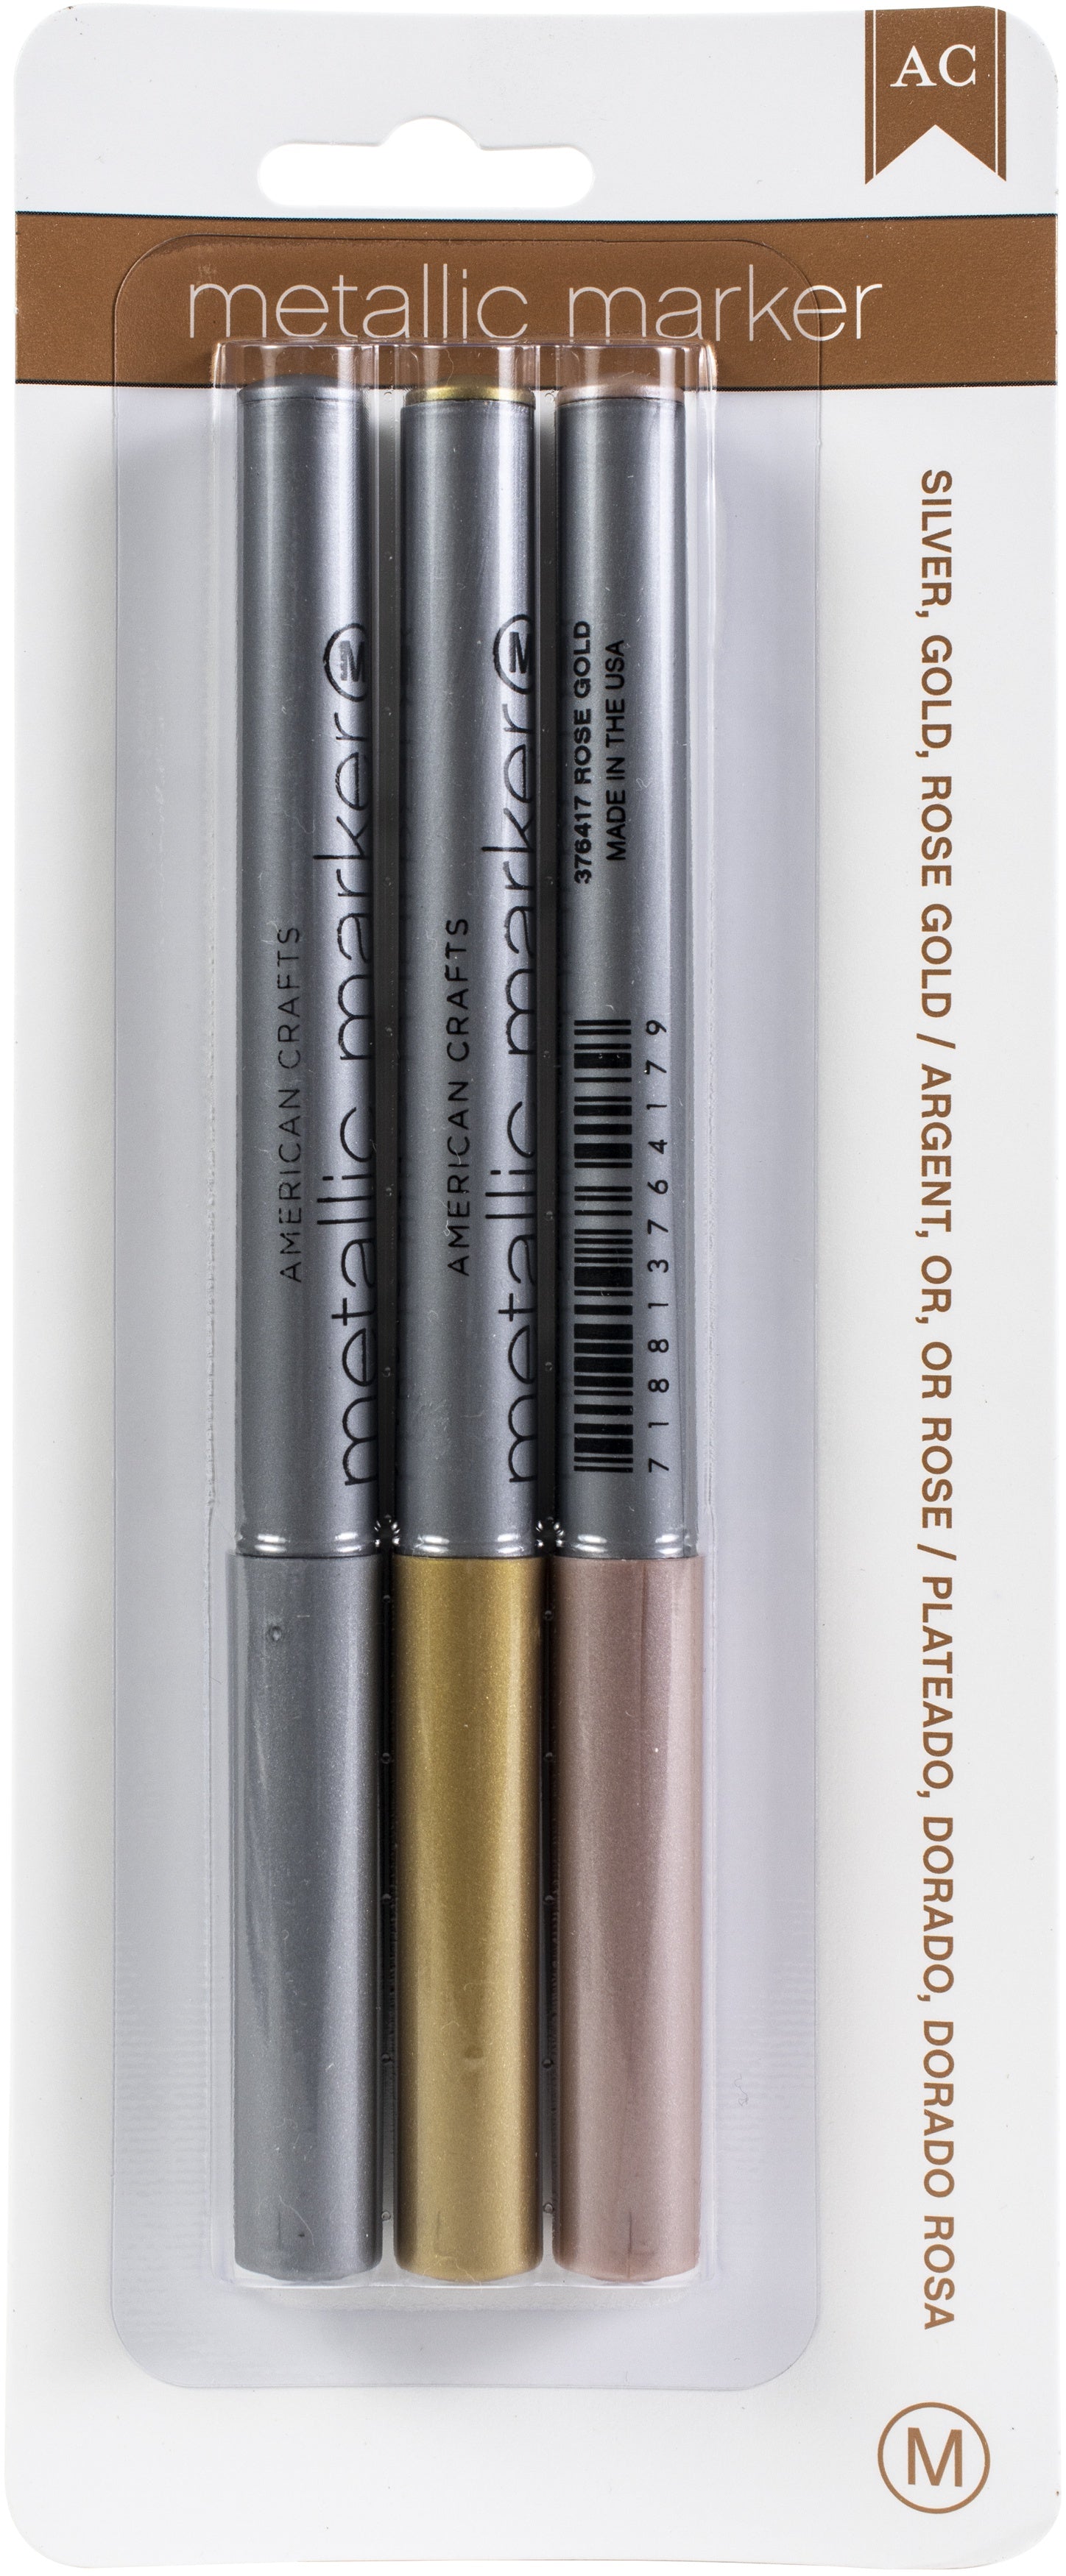 Artfinity Rich Metallic Marker 3mm Bullet Nib, Copper